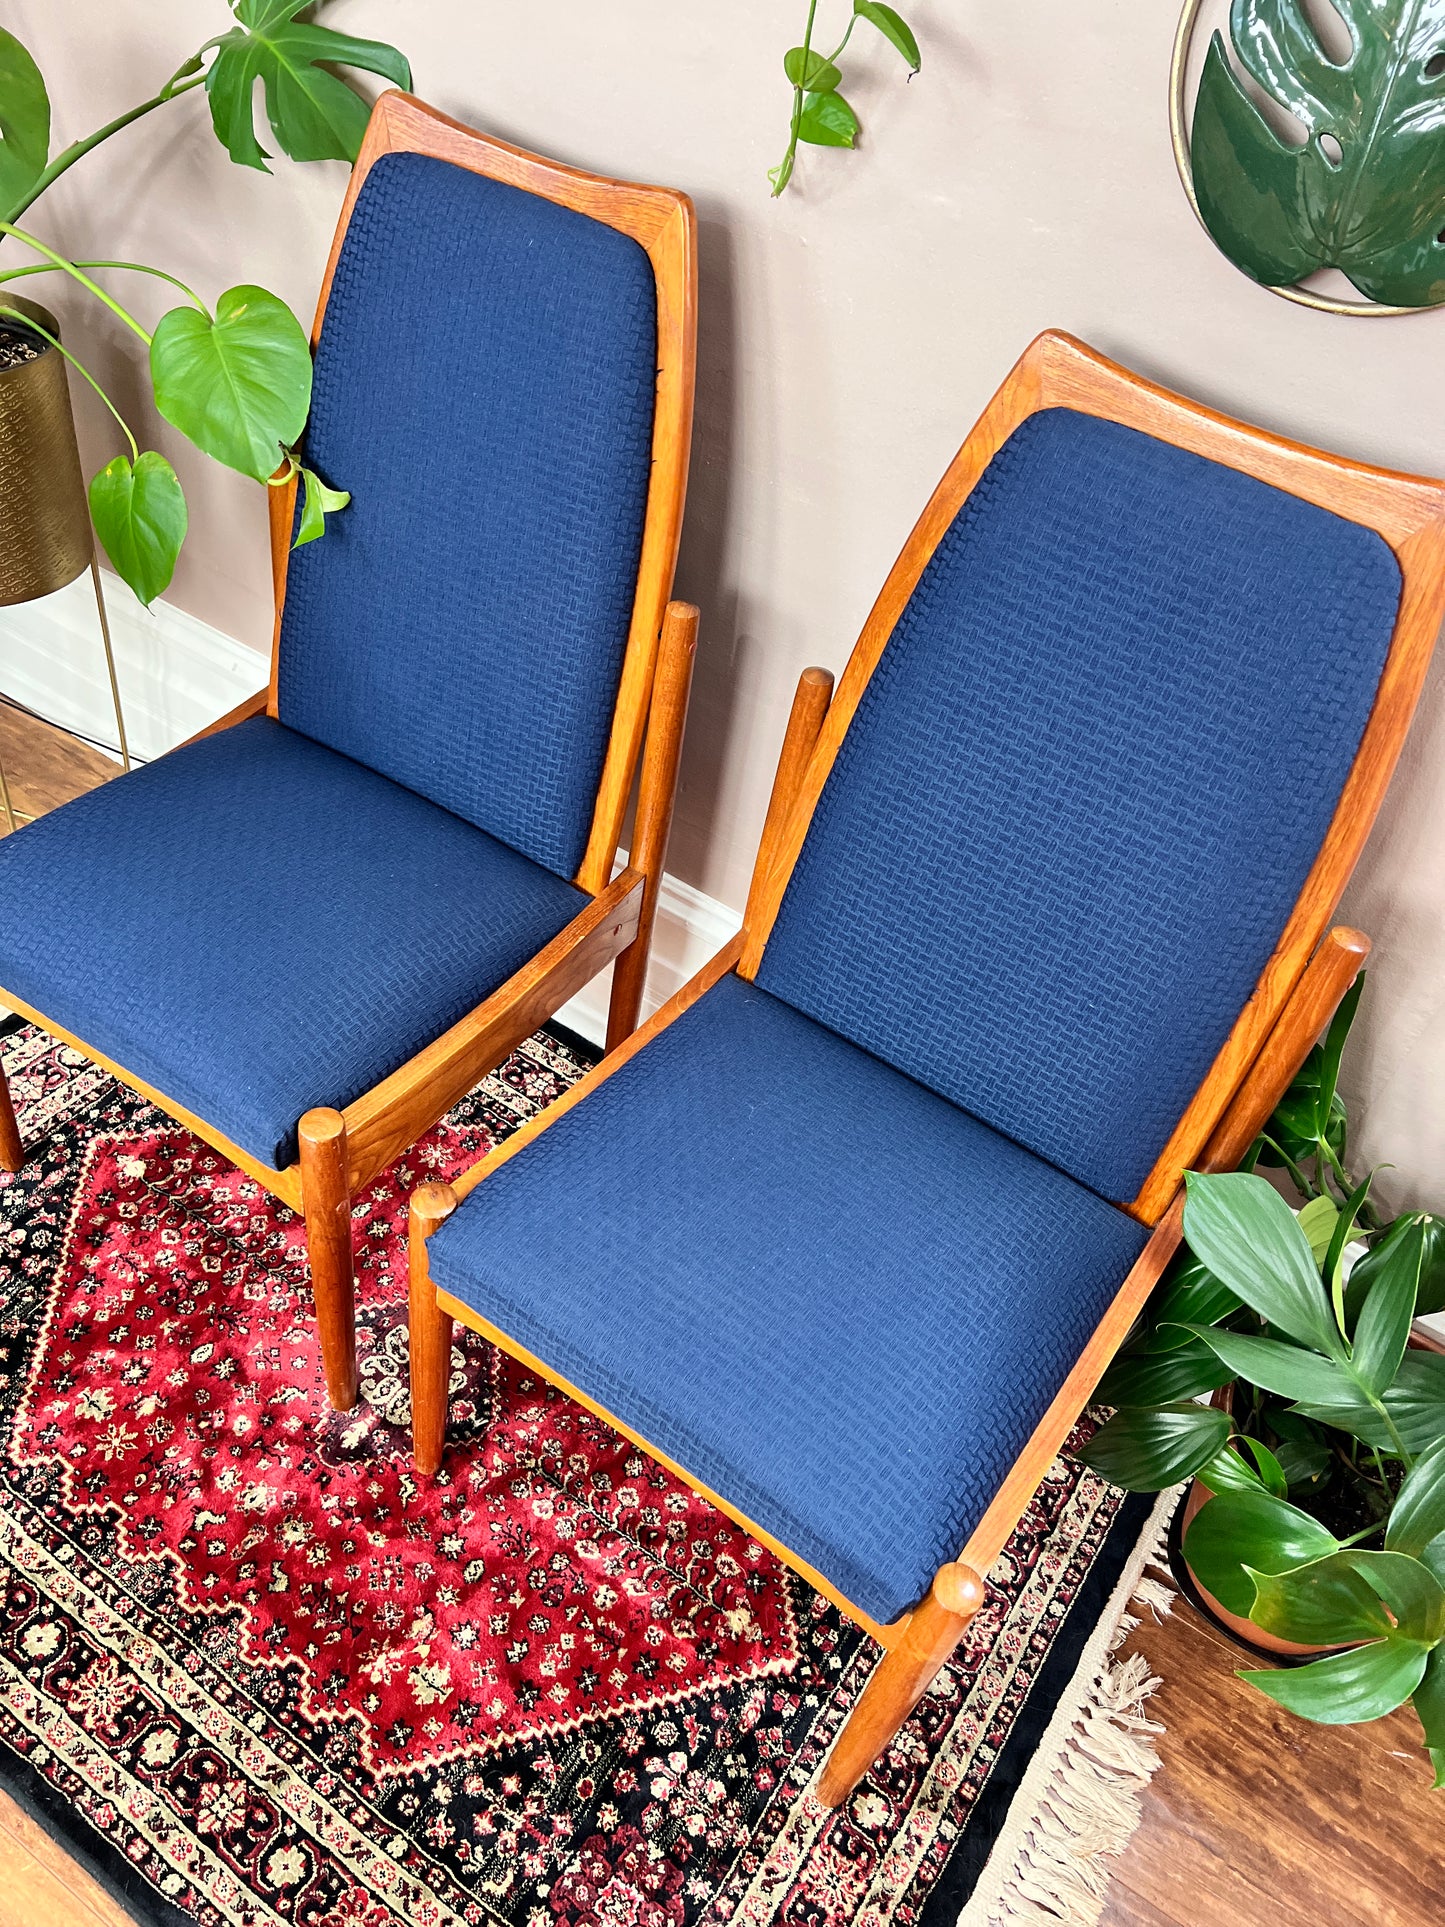 The Saint Tropaz Teak Chairs